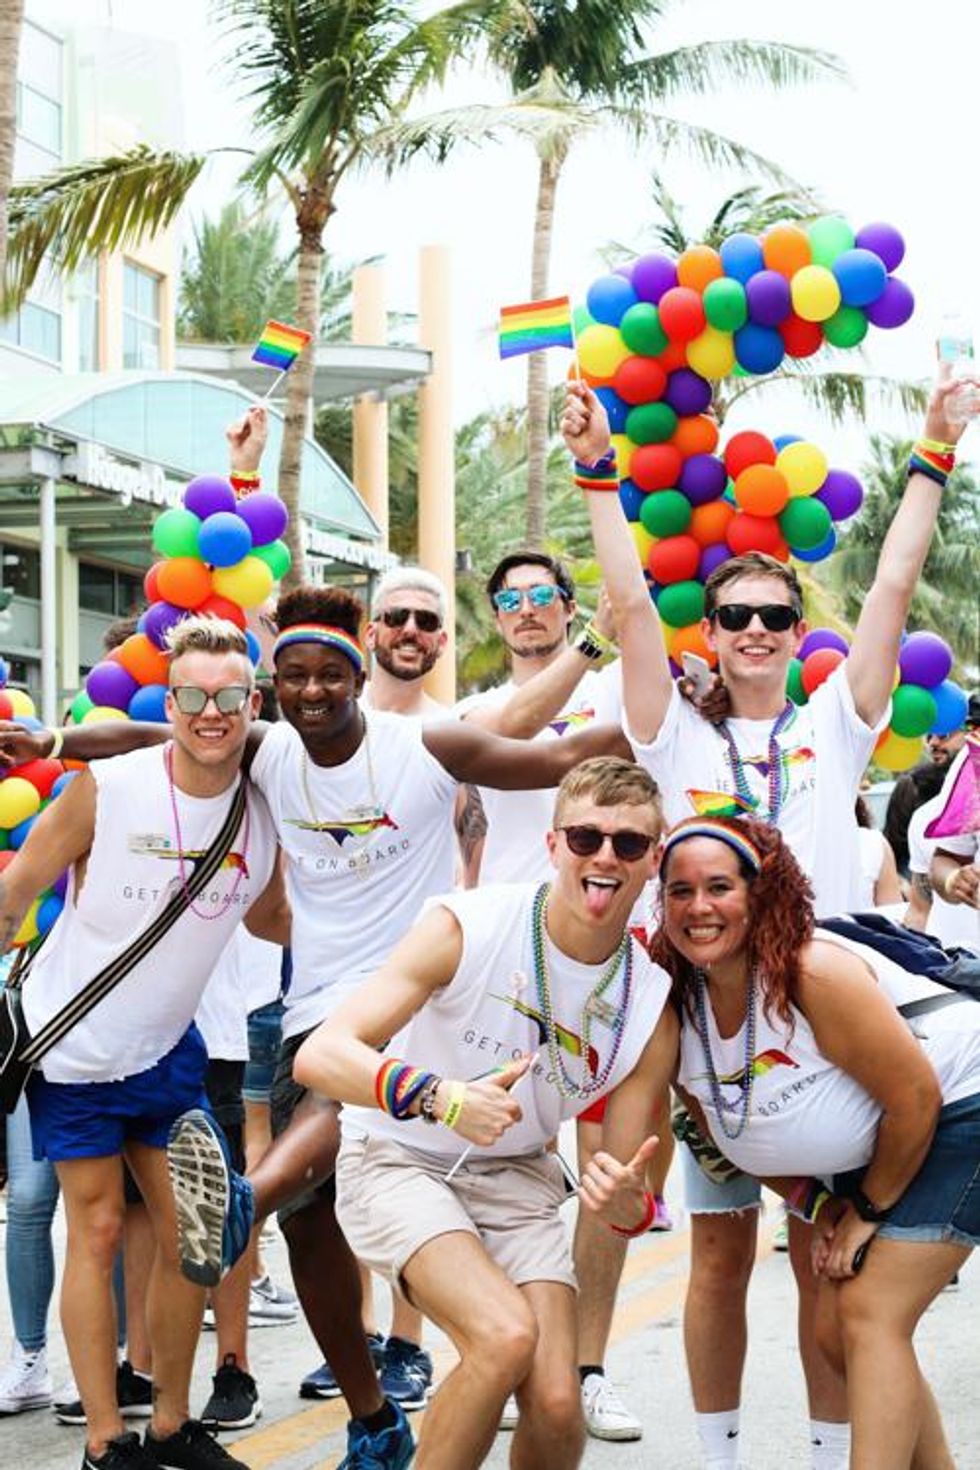 Celebrity Cruises Heats Up Miami Beach Gay Pride